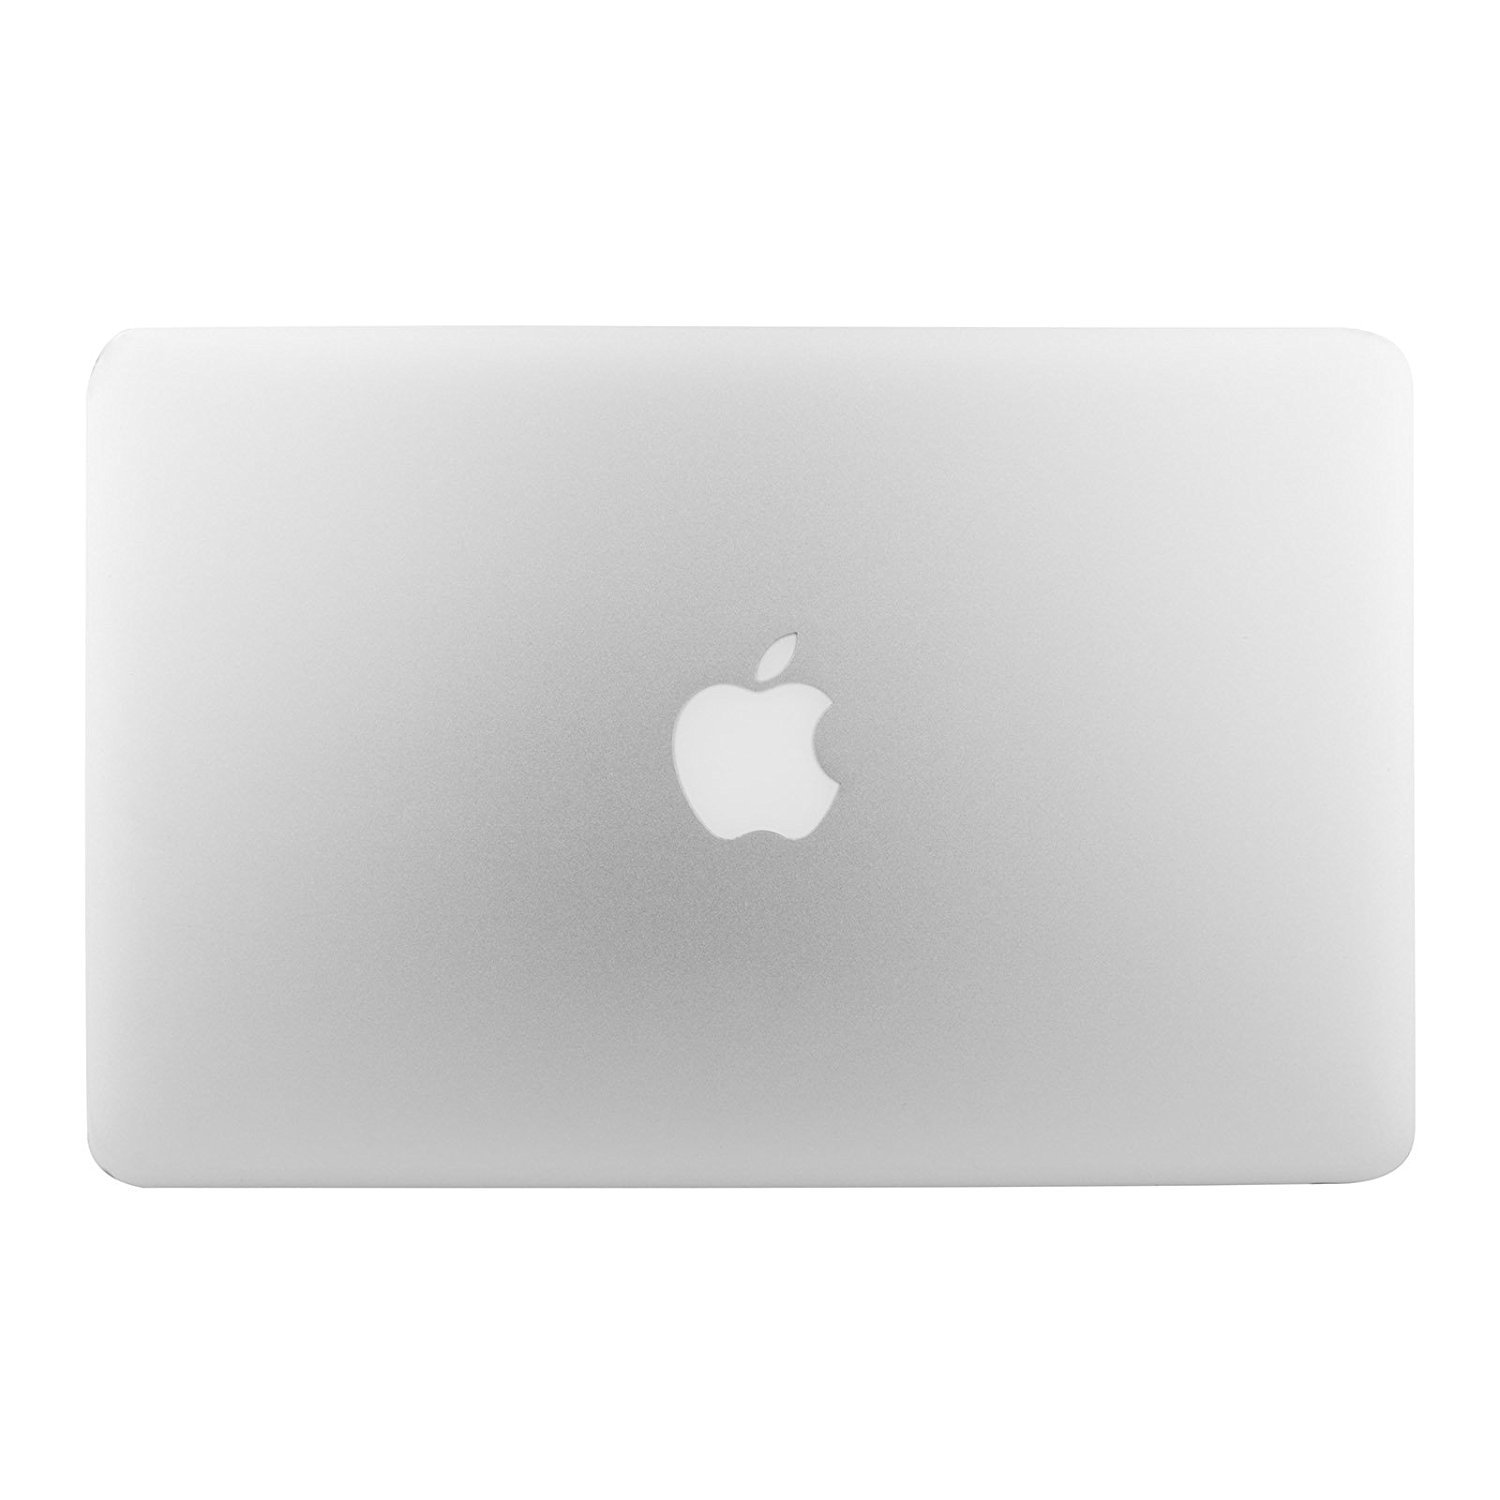 Apple MacBook Air MD711LL/B 11.6in Widescreen LED Backlit HD Laptop, Intel Dual-Core i5 up to 2.7GHz, 4GB RAM, 128GB SSD, HD Camera, USB 3.0, 802.11ac, Bluetooth, Mac OS X (Renewed)